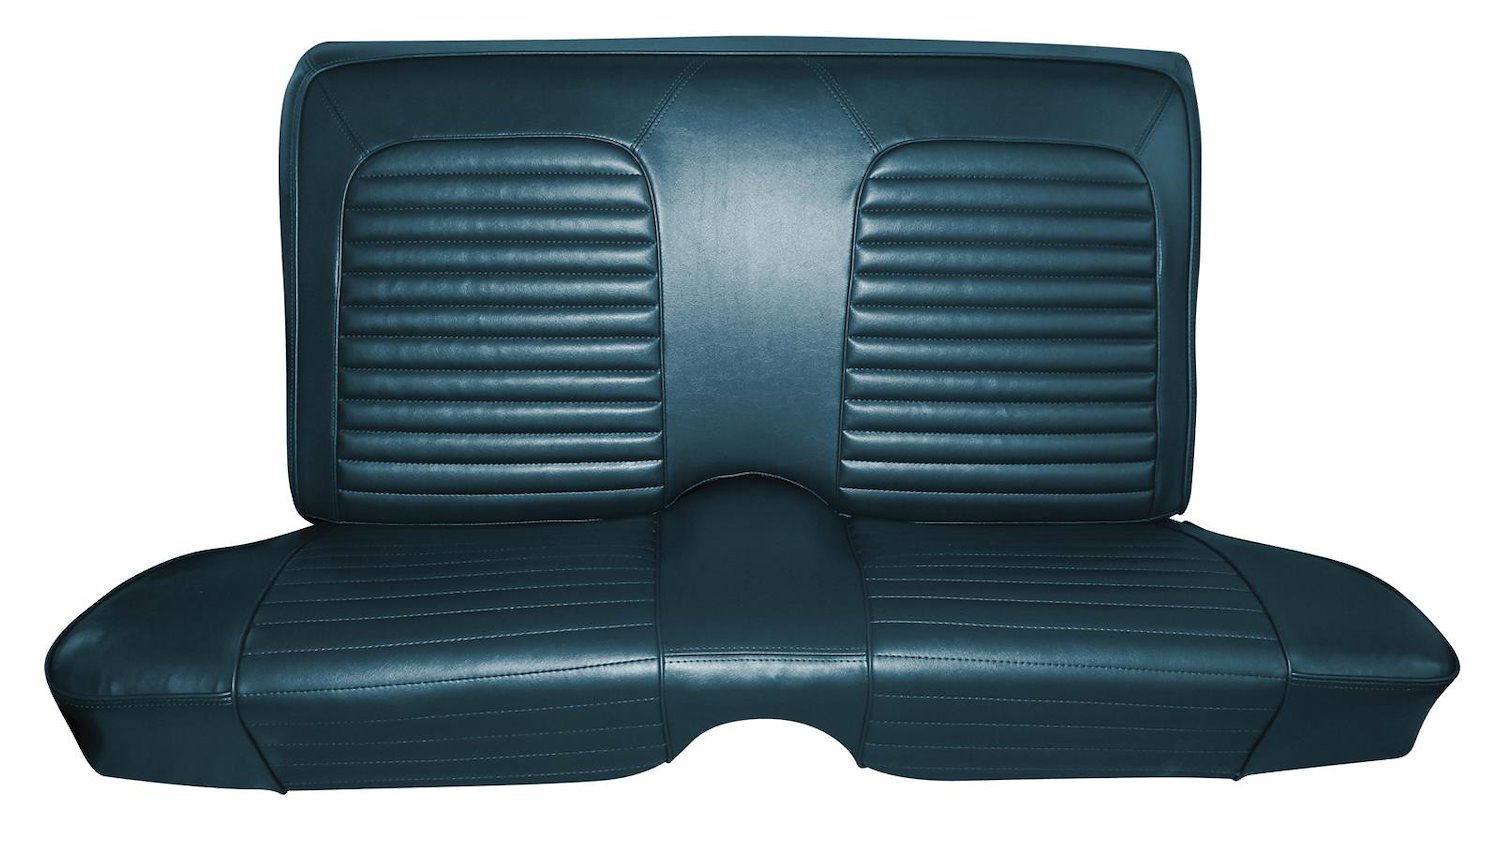 1968 Chevrolet Impala Standard Interior Two-Tone Rear Bench Seat Interior Upholstery Set